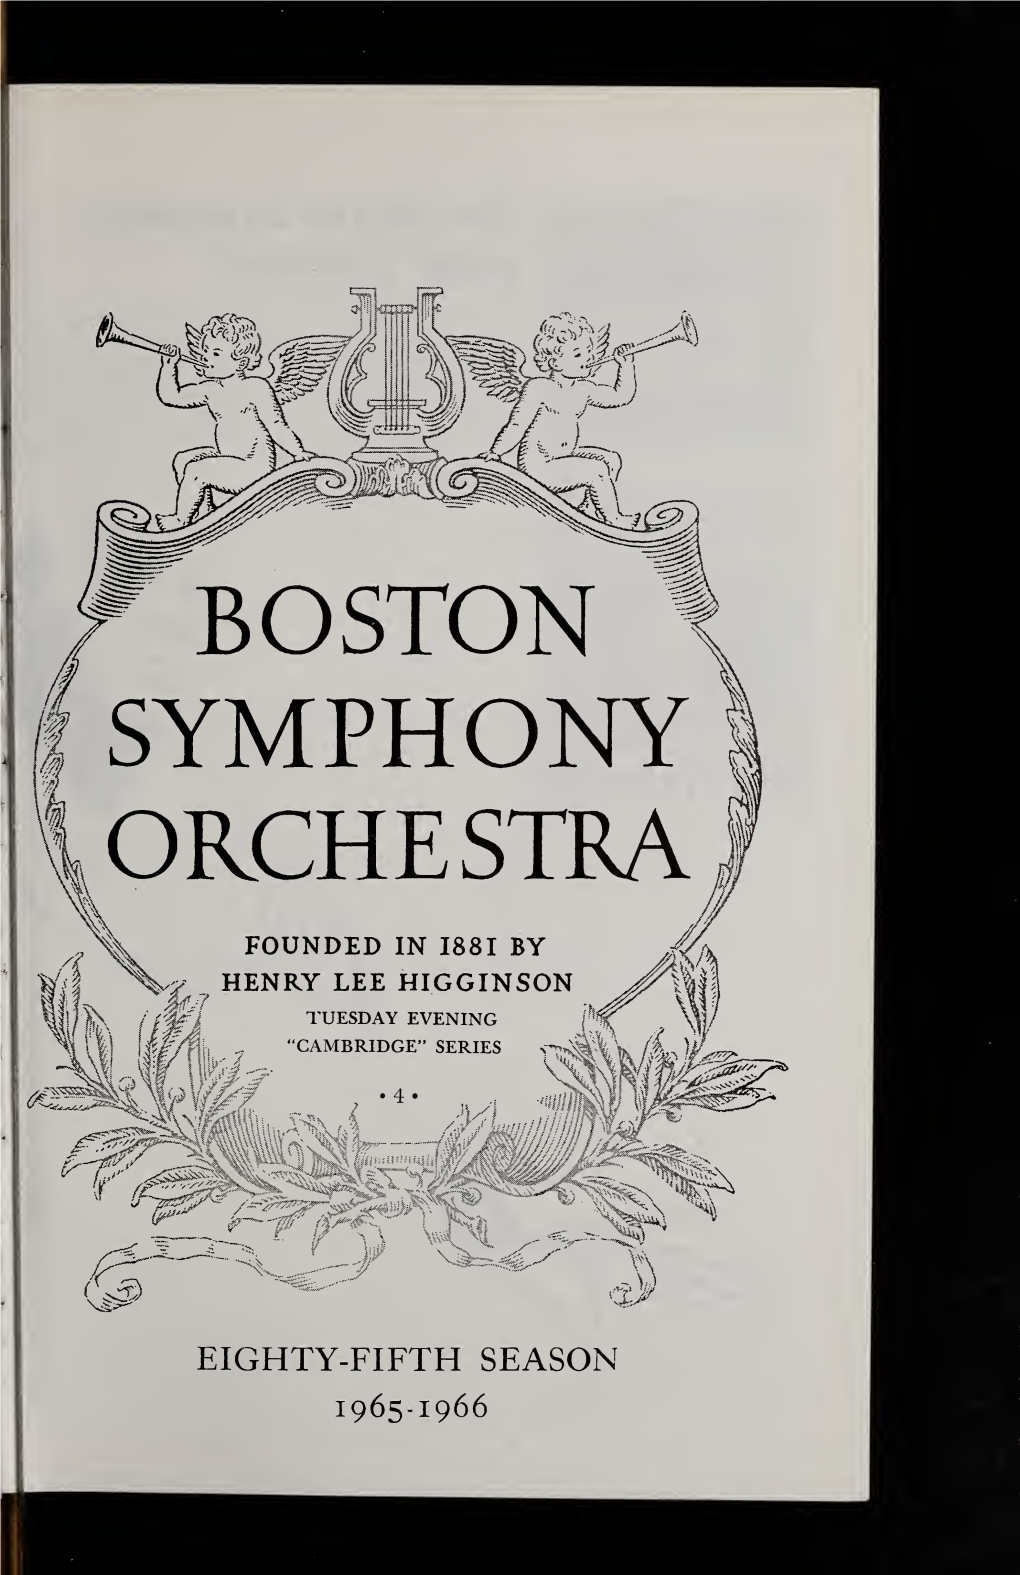 Boston Symphony Orchestra Concert Programs, Season 85, 1965-1966